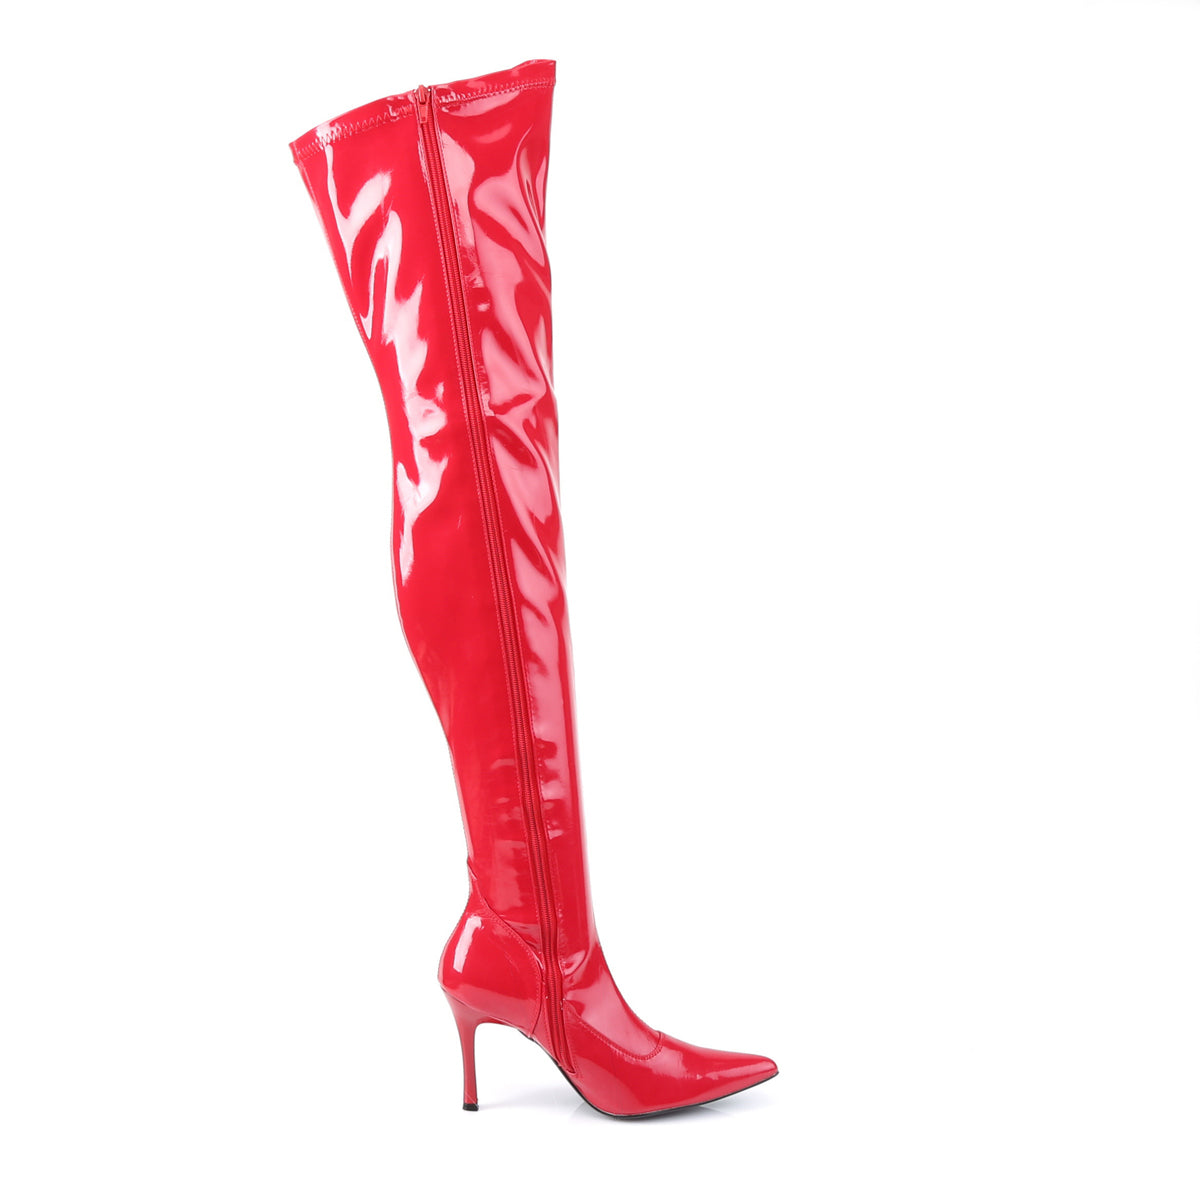 LUST-3000 Funtasma 4 Inch Heel Red Women's Boots Funtasma Costume Shoes Fancy Dress